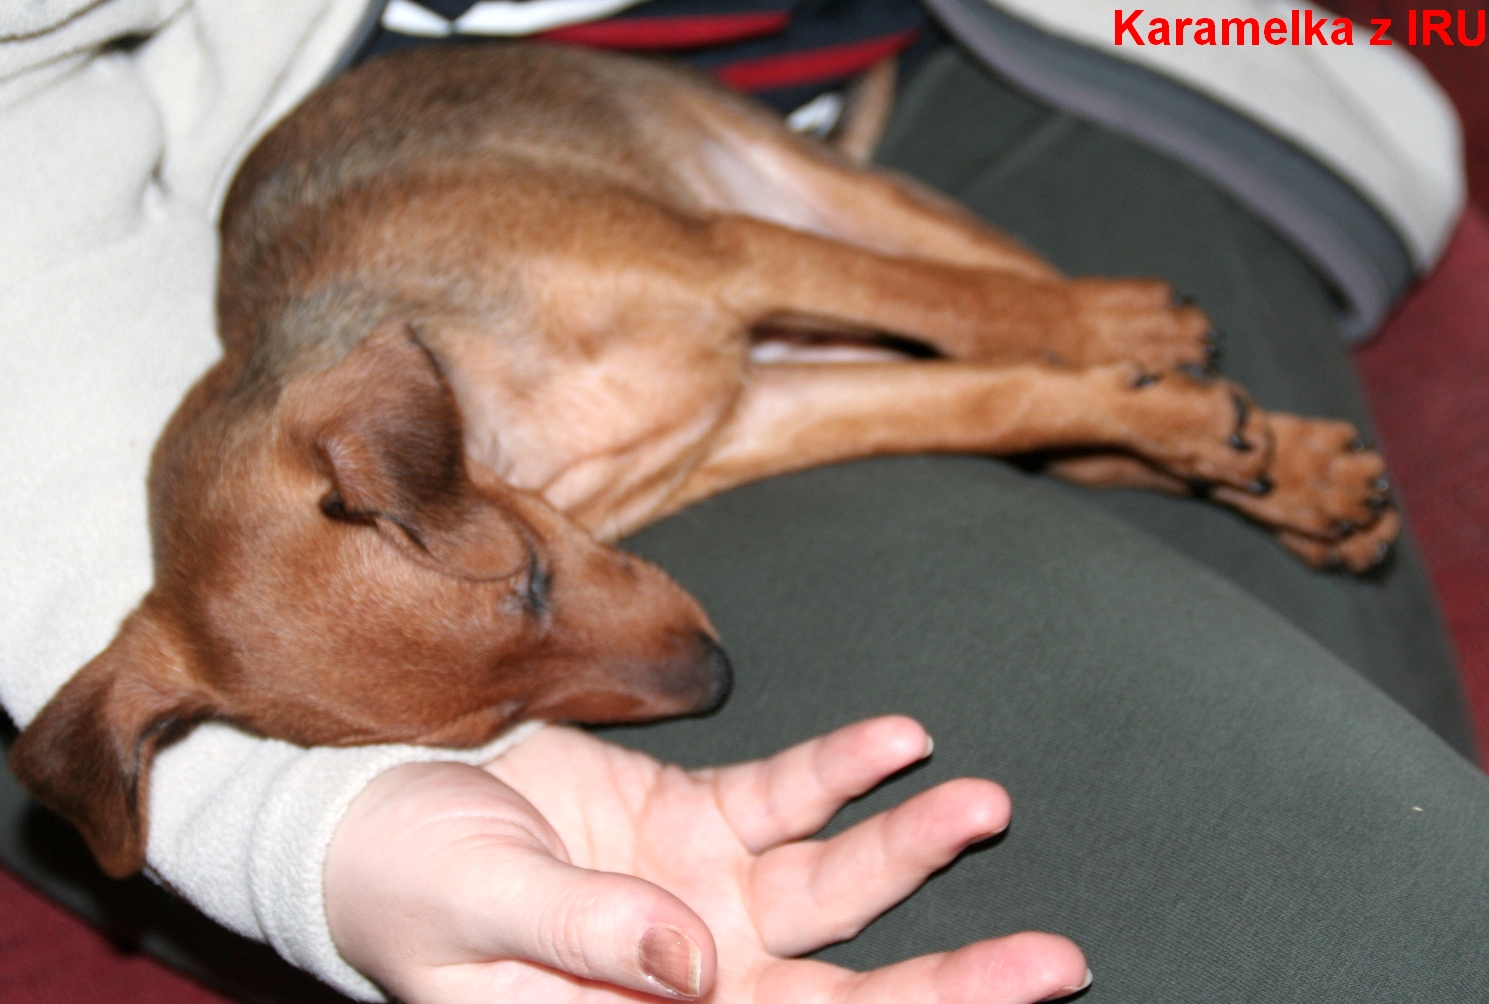 8.4.2013 Karamelka z IRU doma,zase usnula v náruči .D